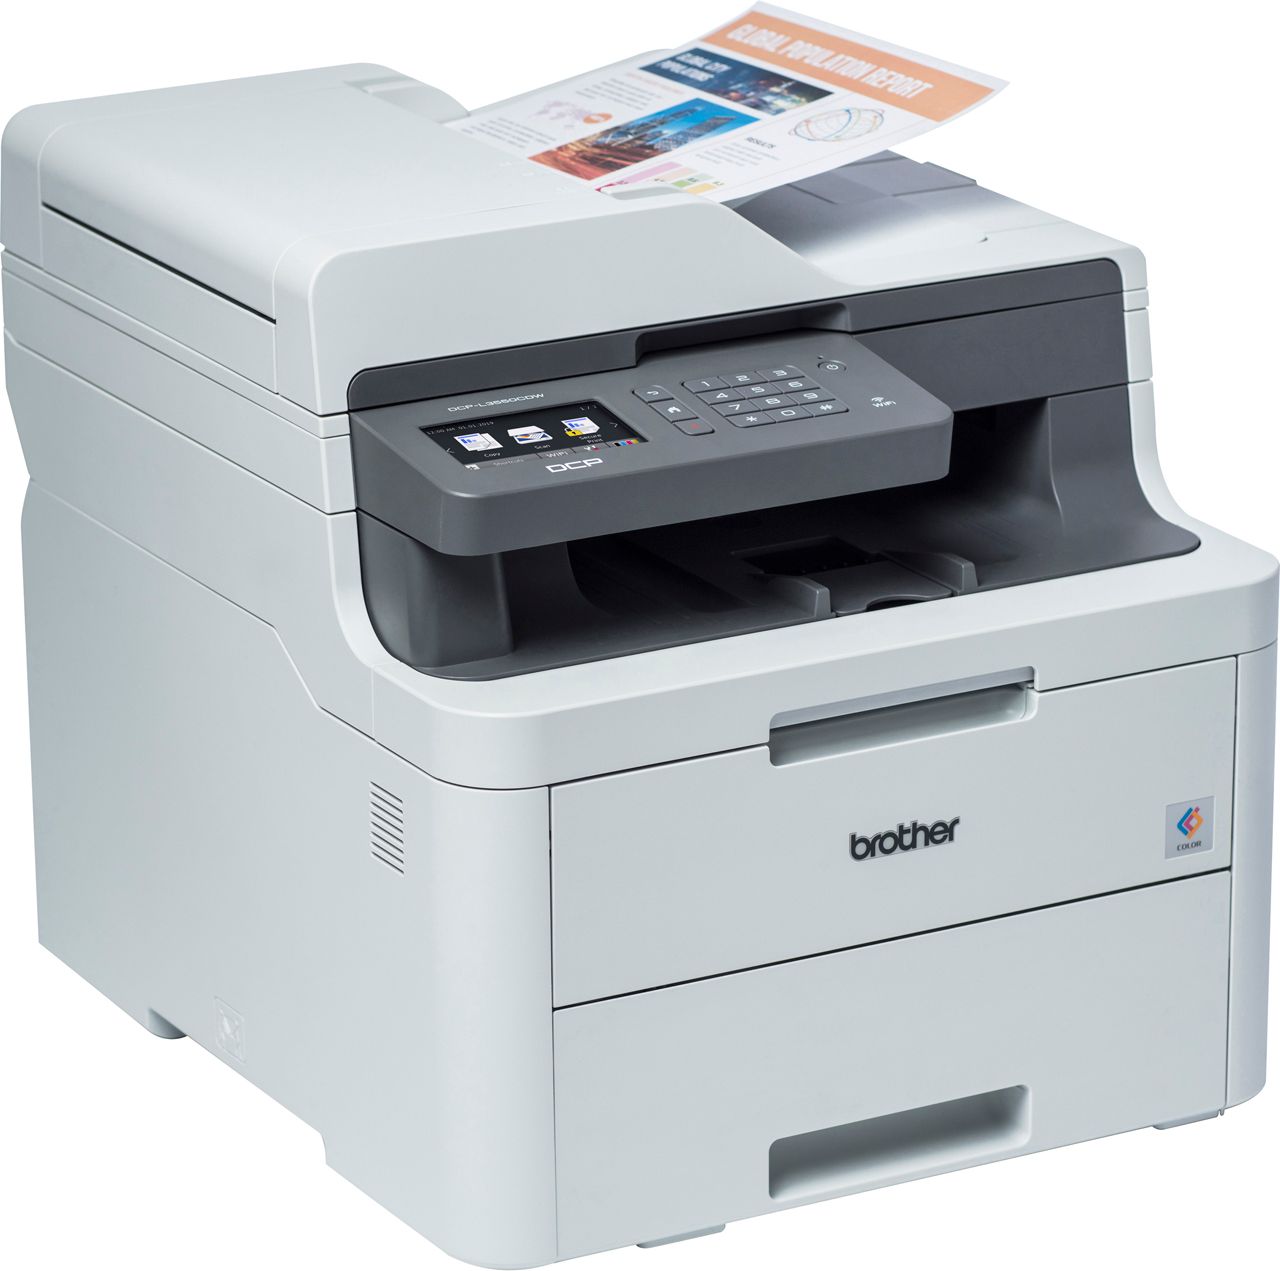 Brother DCP-L3550CDW LED Printer - Grey